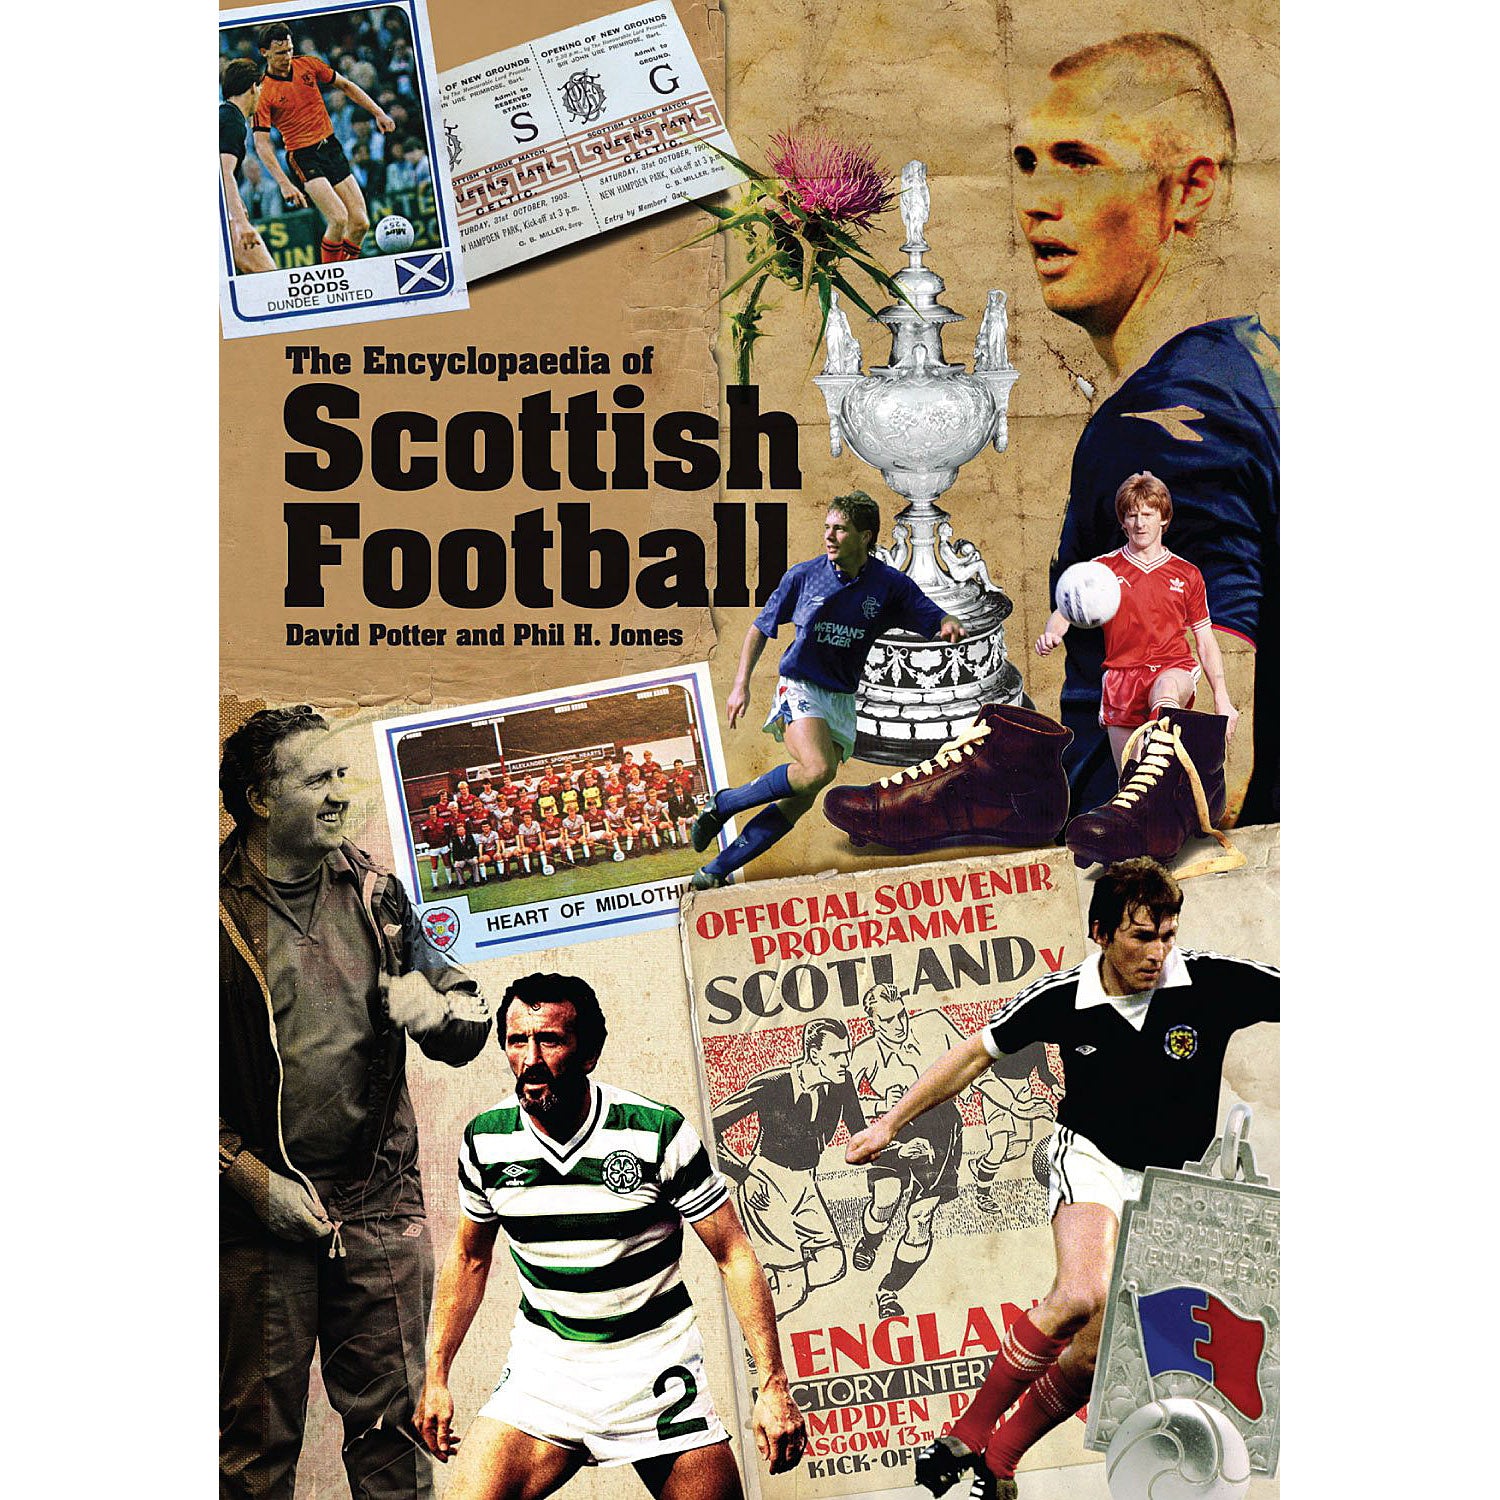 The Encyclopaedia of Scottish Football – Hardback edition